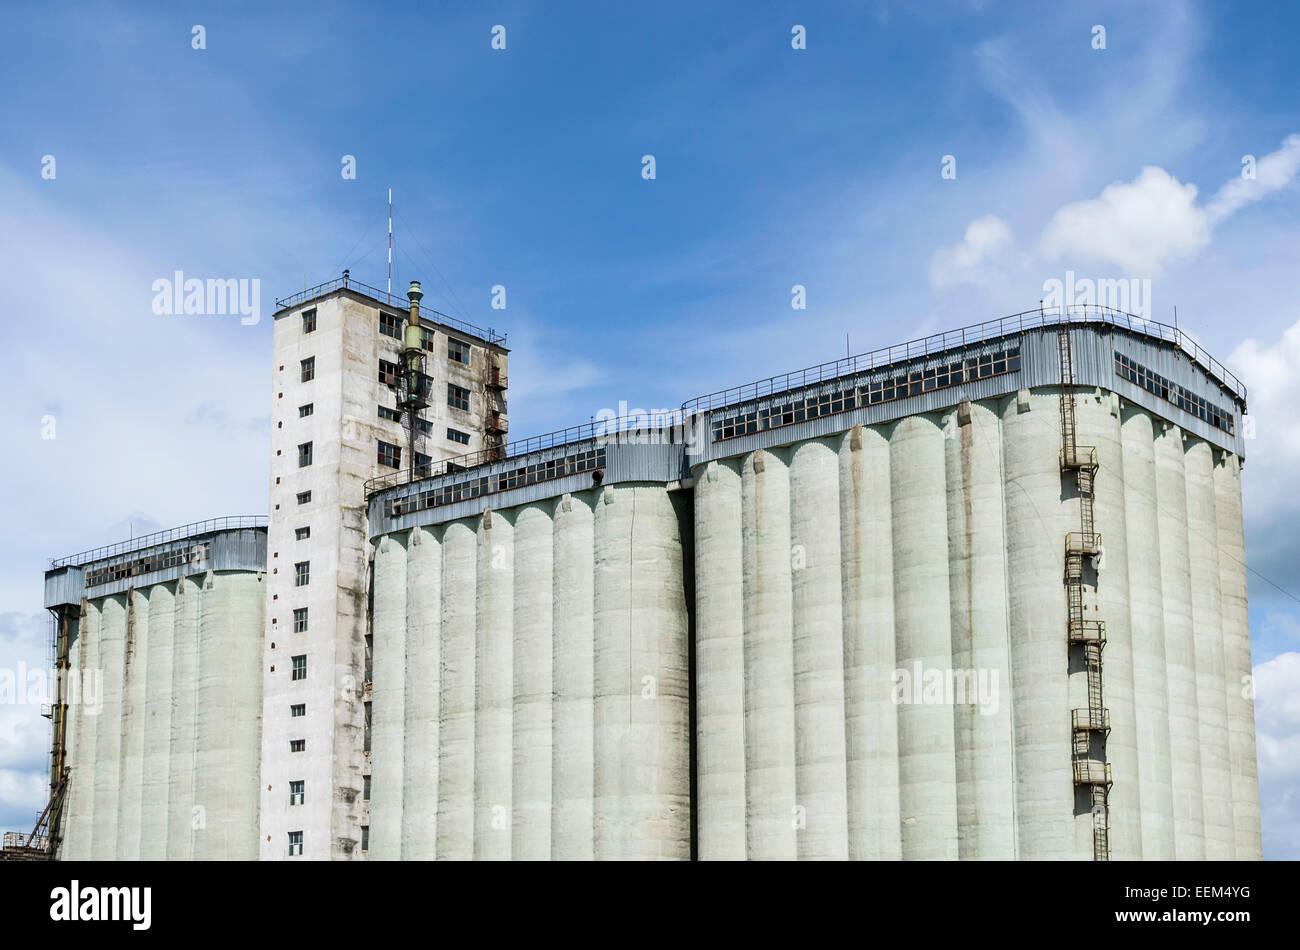 High capacity concrete silo building for grain storage Stock Photo - Alamy